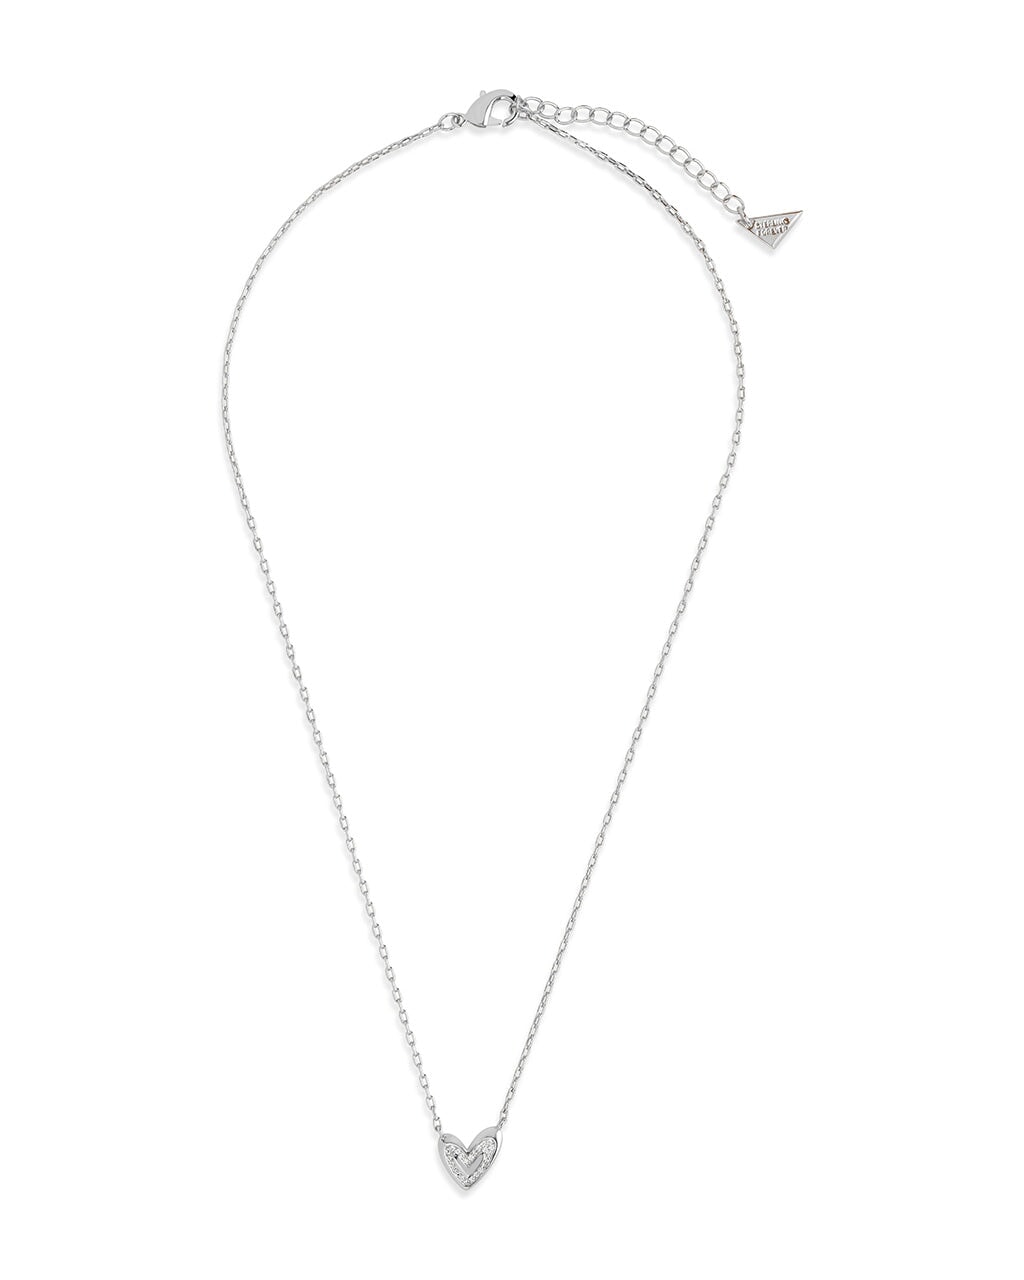 Mabel CZ Heart Pendant Necklace Necklace Sterling Forever 